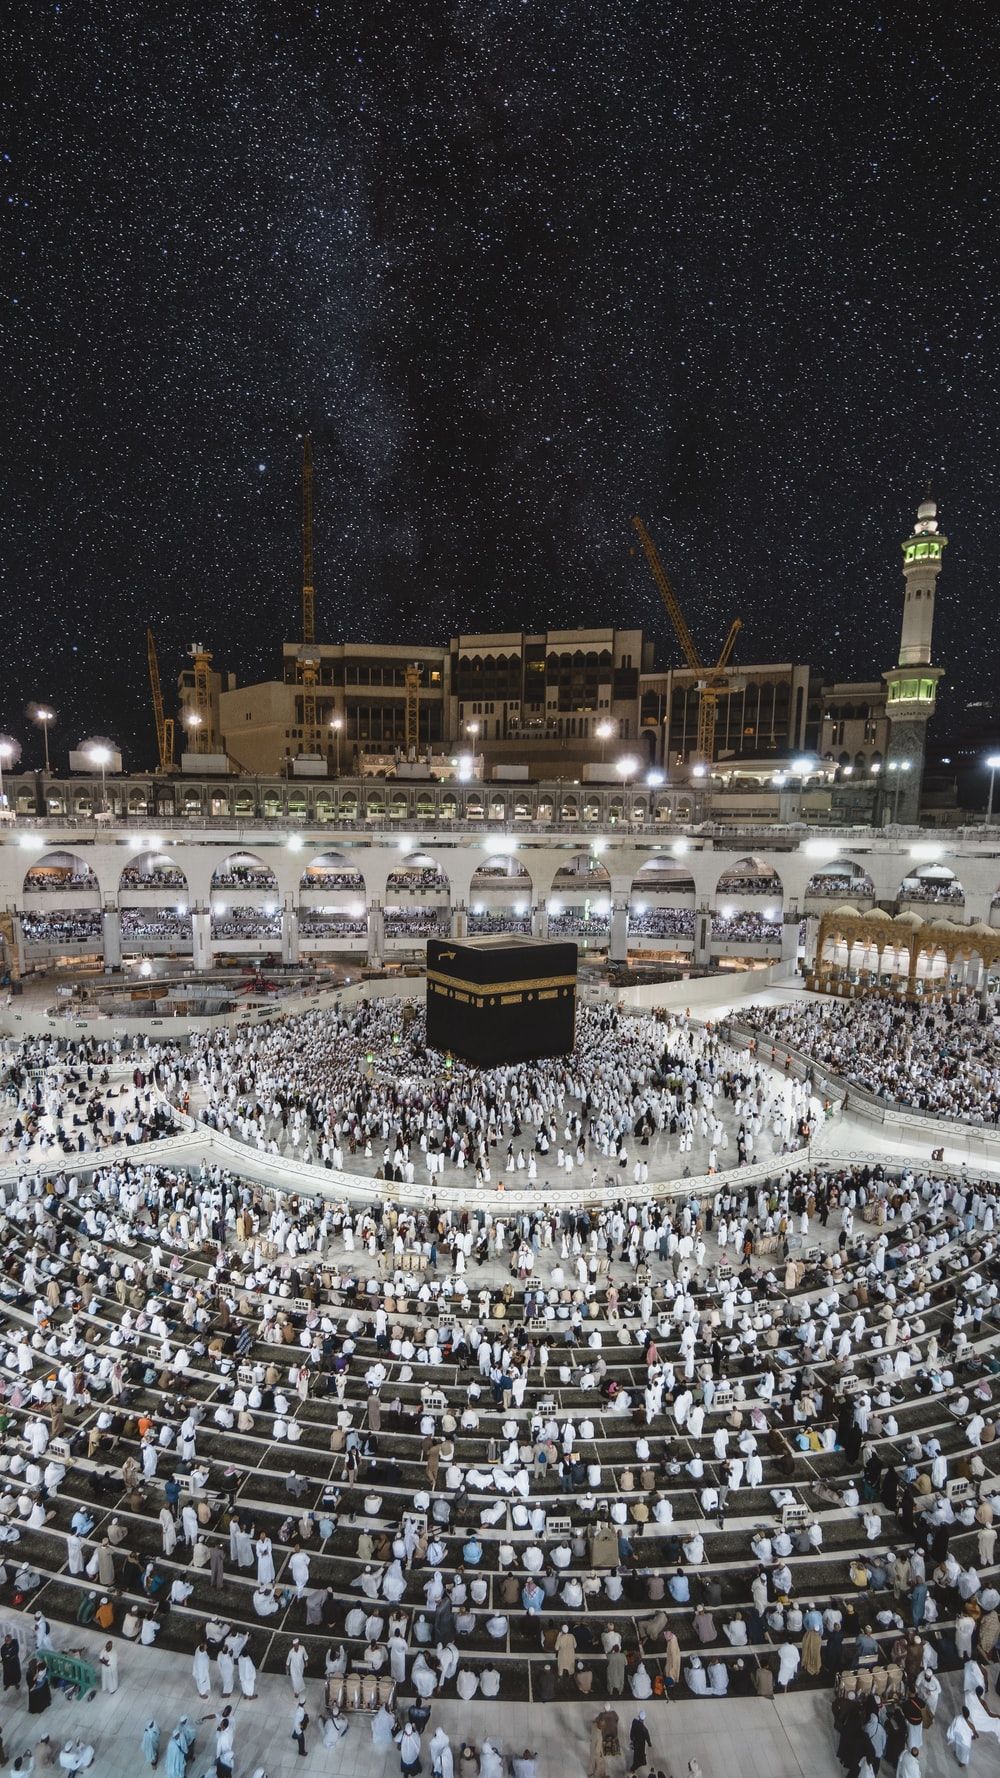 Masjid Al Haram Mecca Saudi Arabia Picture. Download Free Image